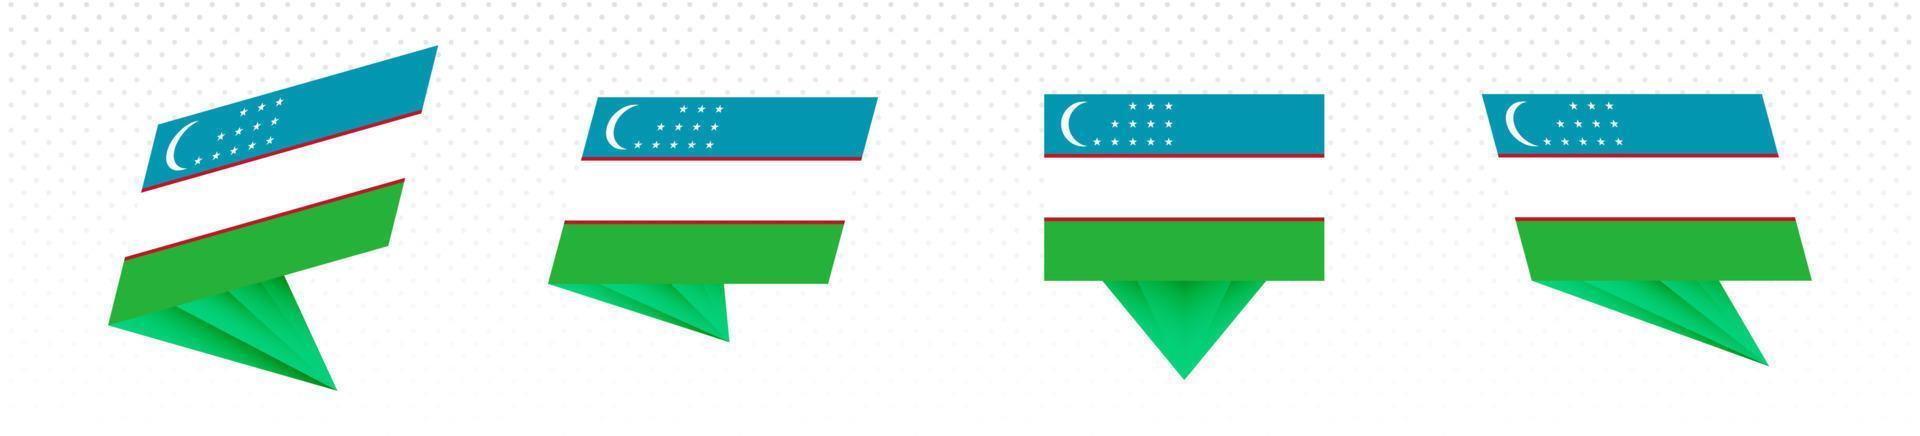 Flag of Uzbekistan in modern abstract design, flag set. vector